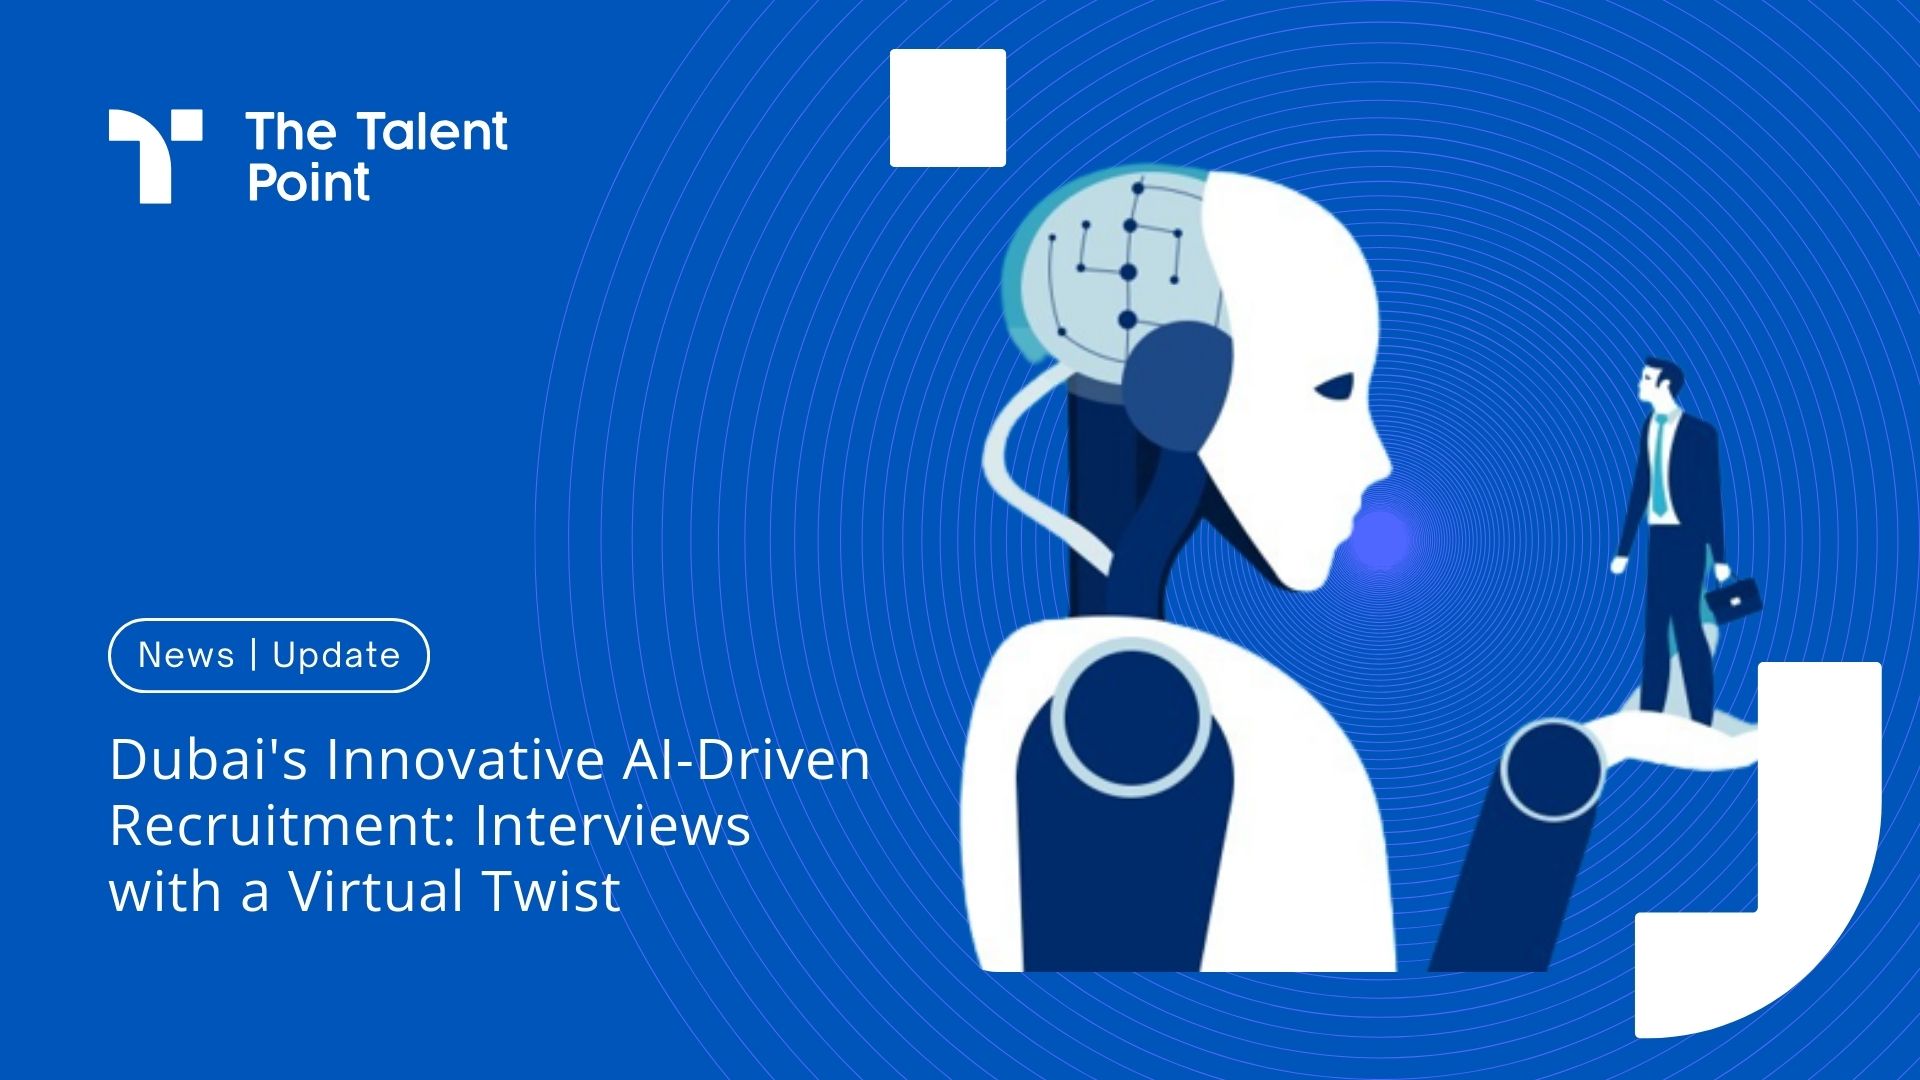 Dubai's Innovative AI-Driven Recruitment: Interviews with a Virtual Twist